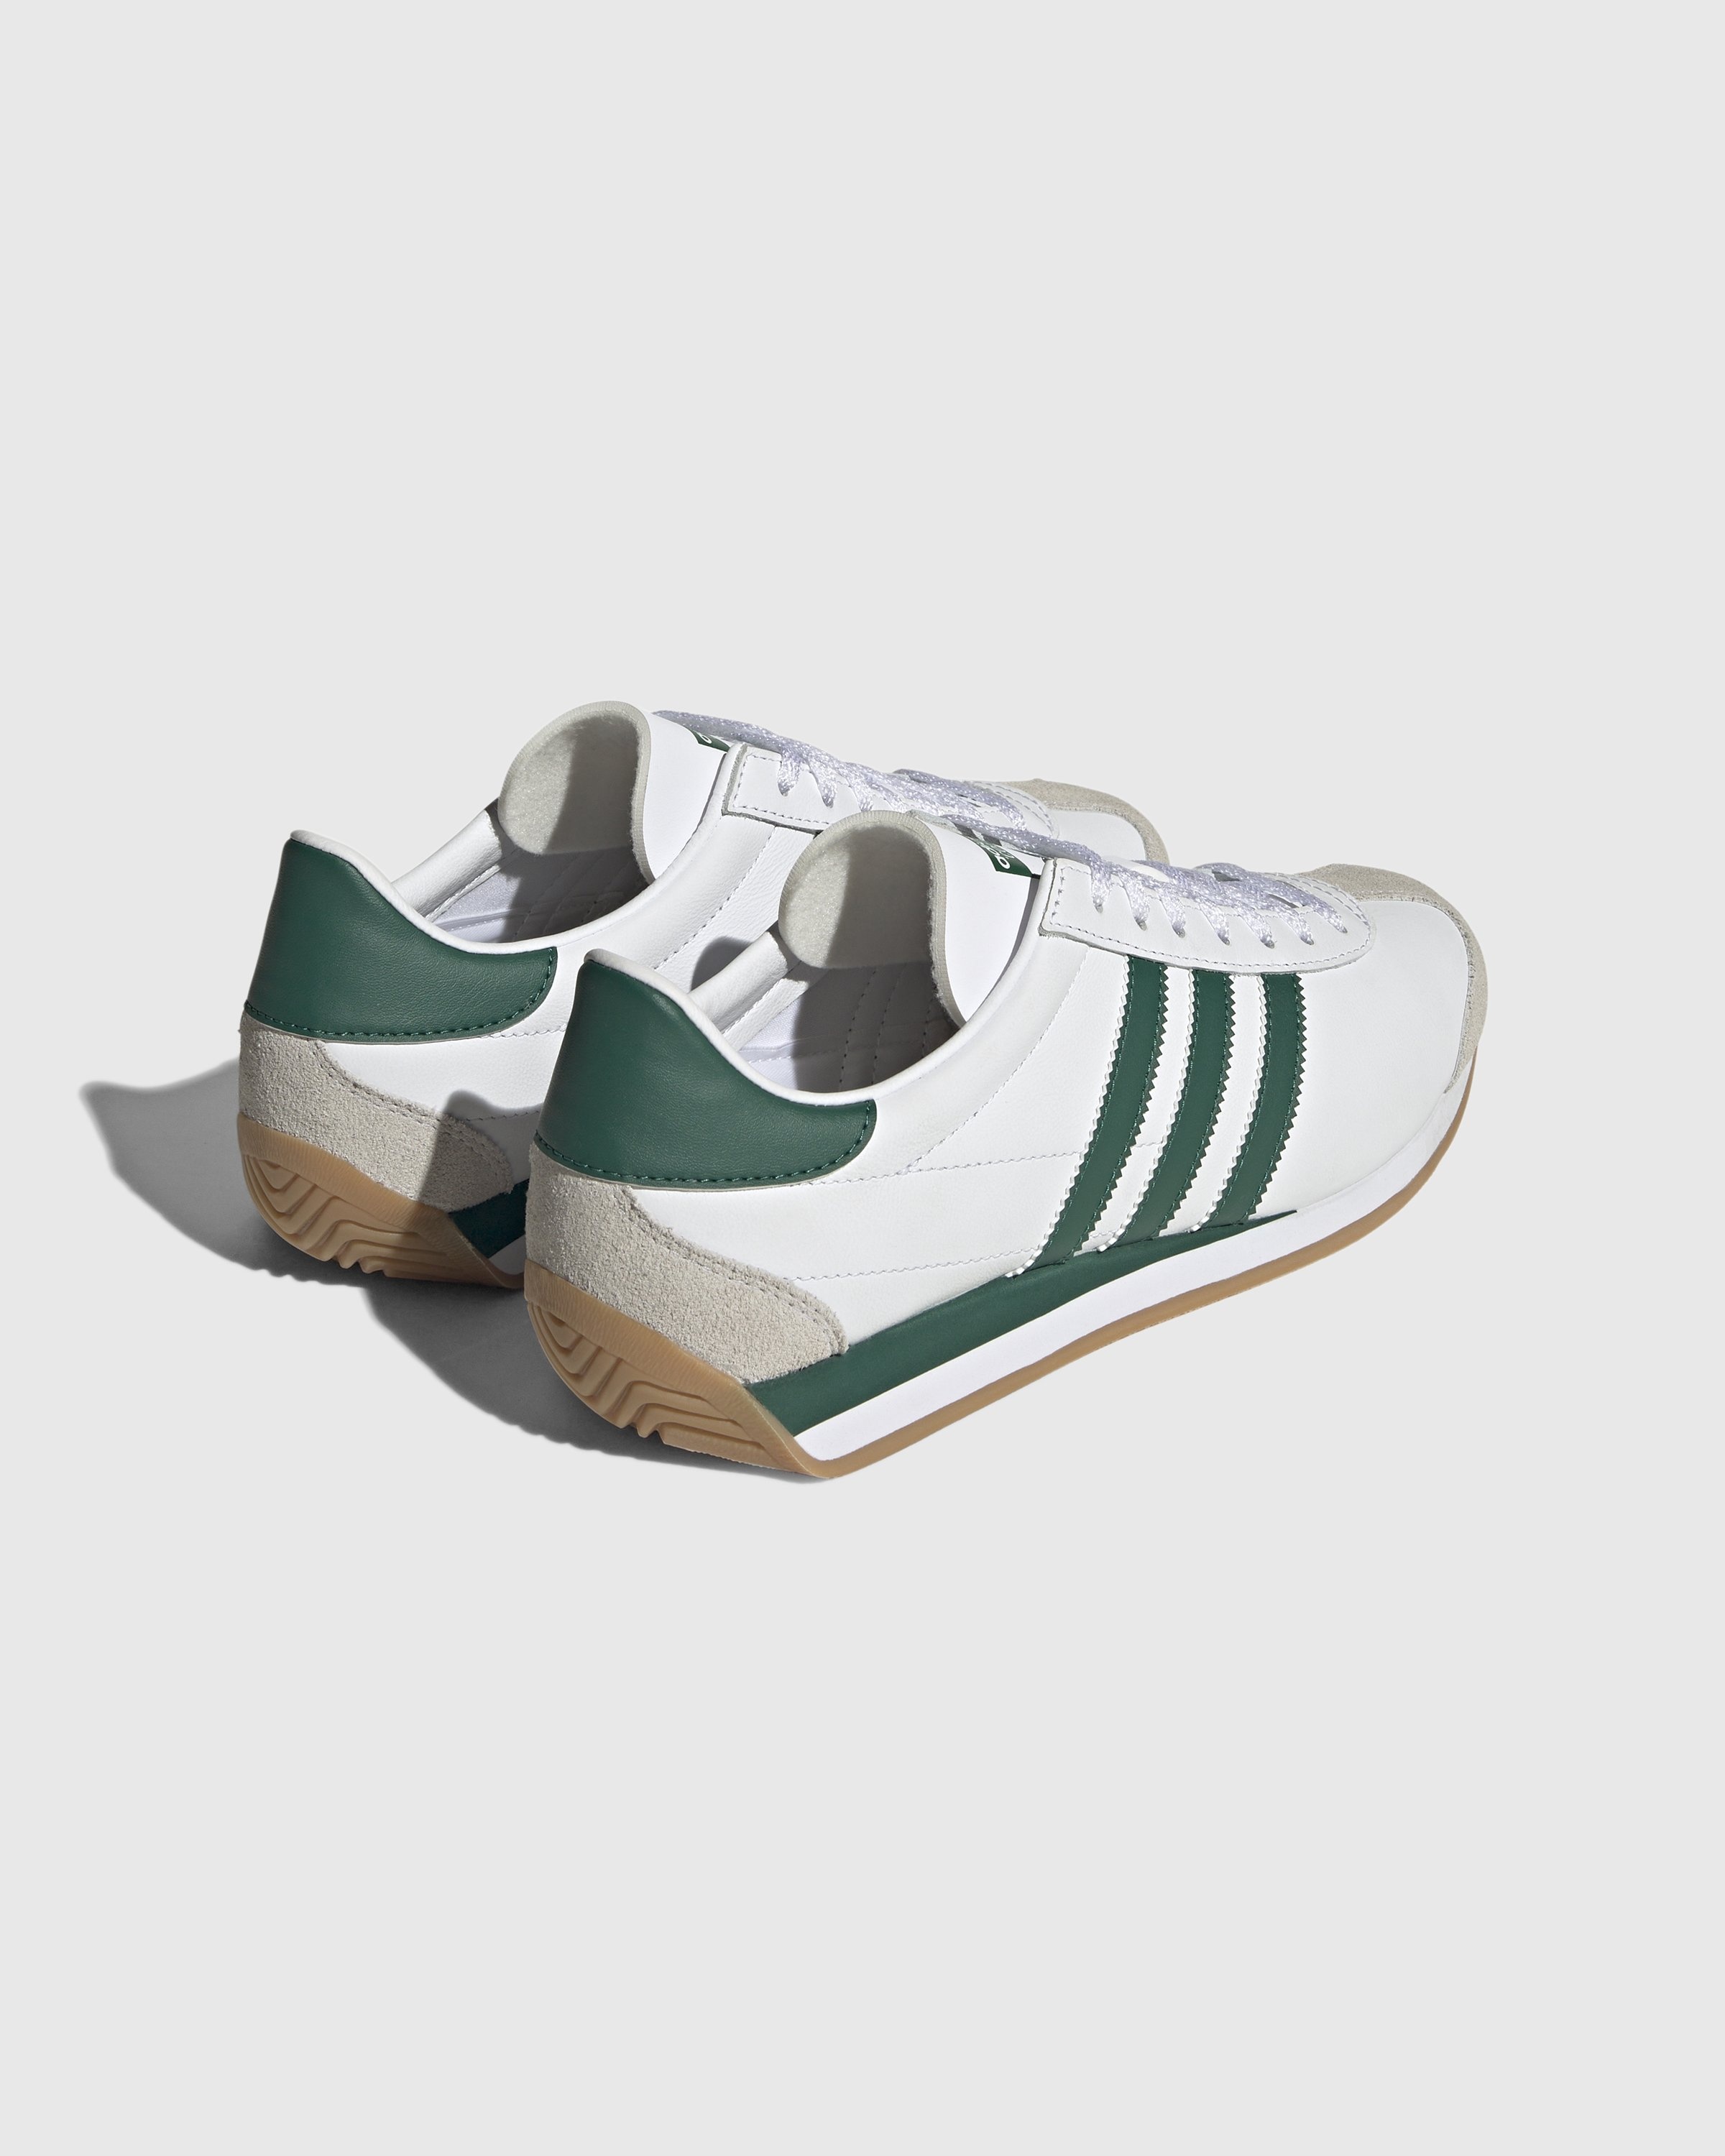 Adidas – Country OG Cloud White/Collegiate Green | Highsnobiety Shop